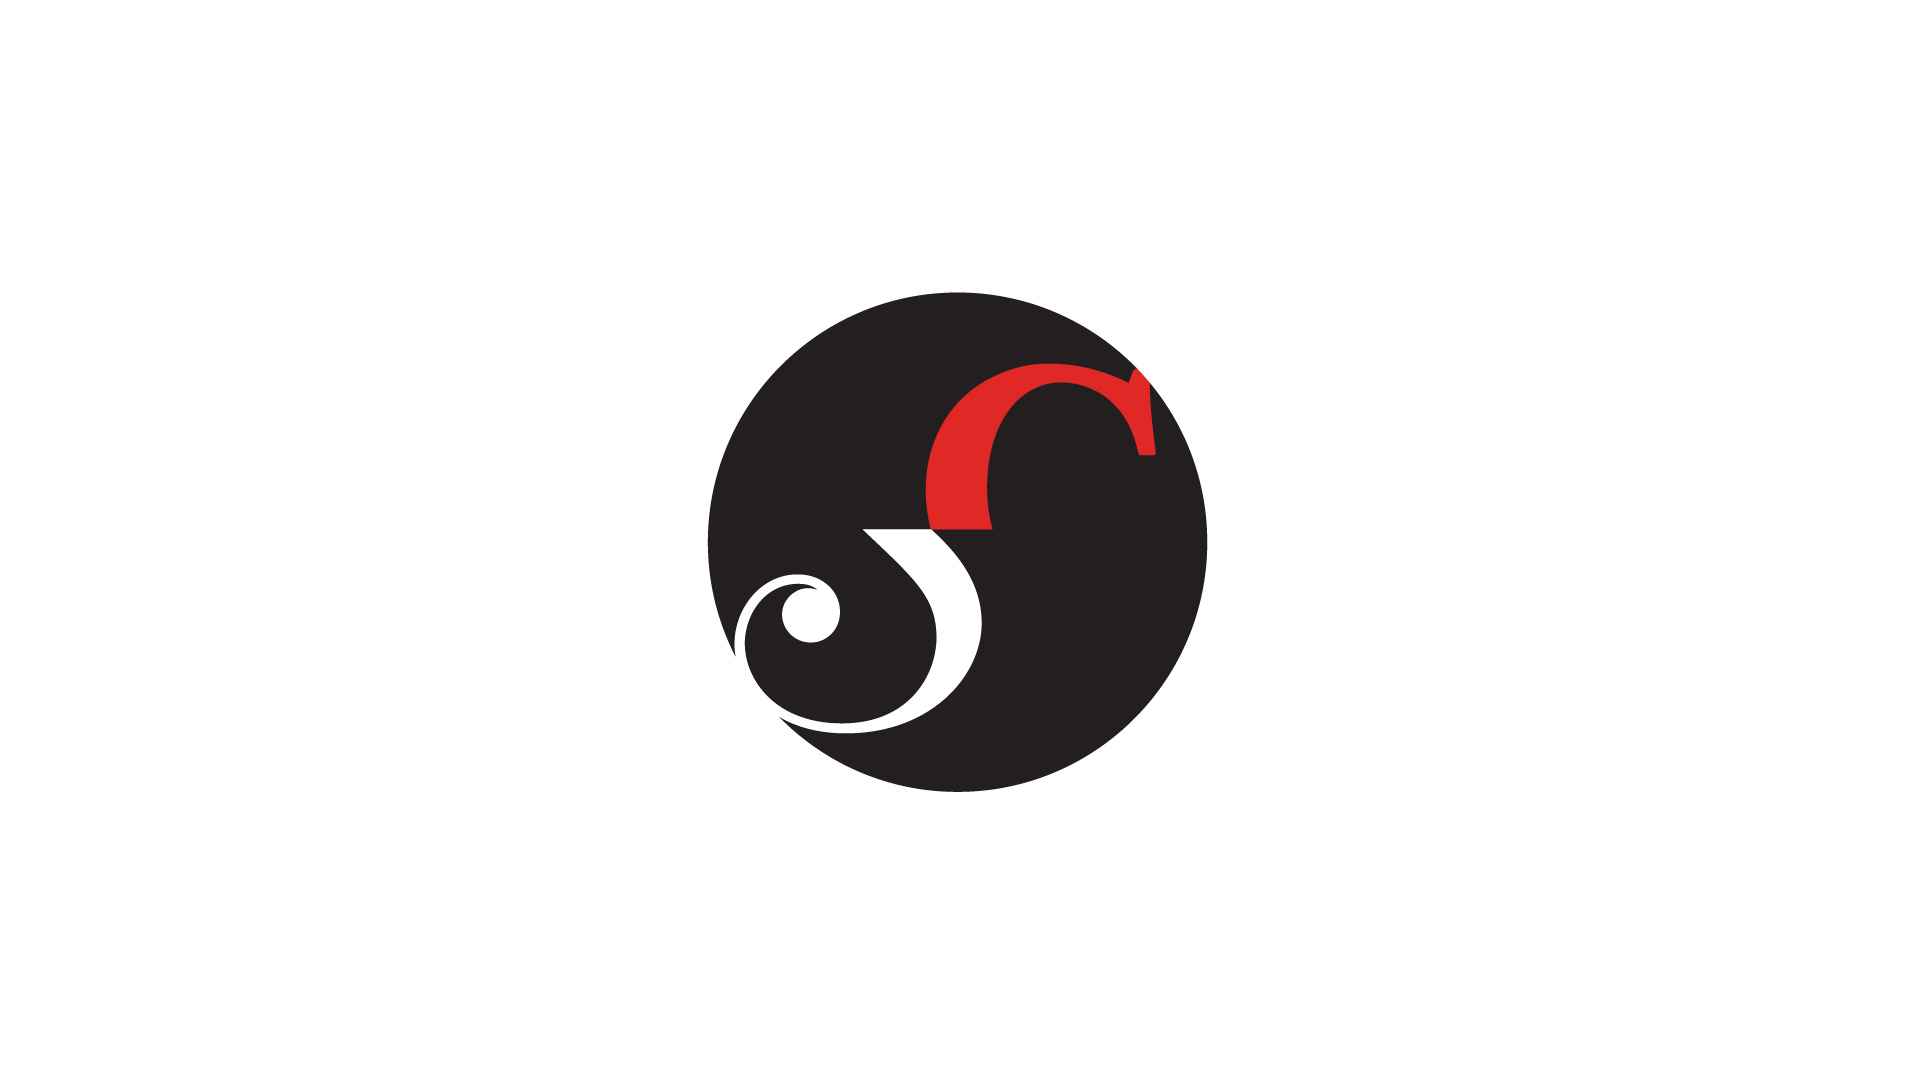 CS Luxury logo icon in circle